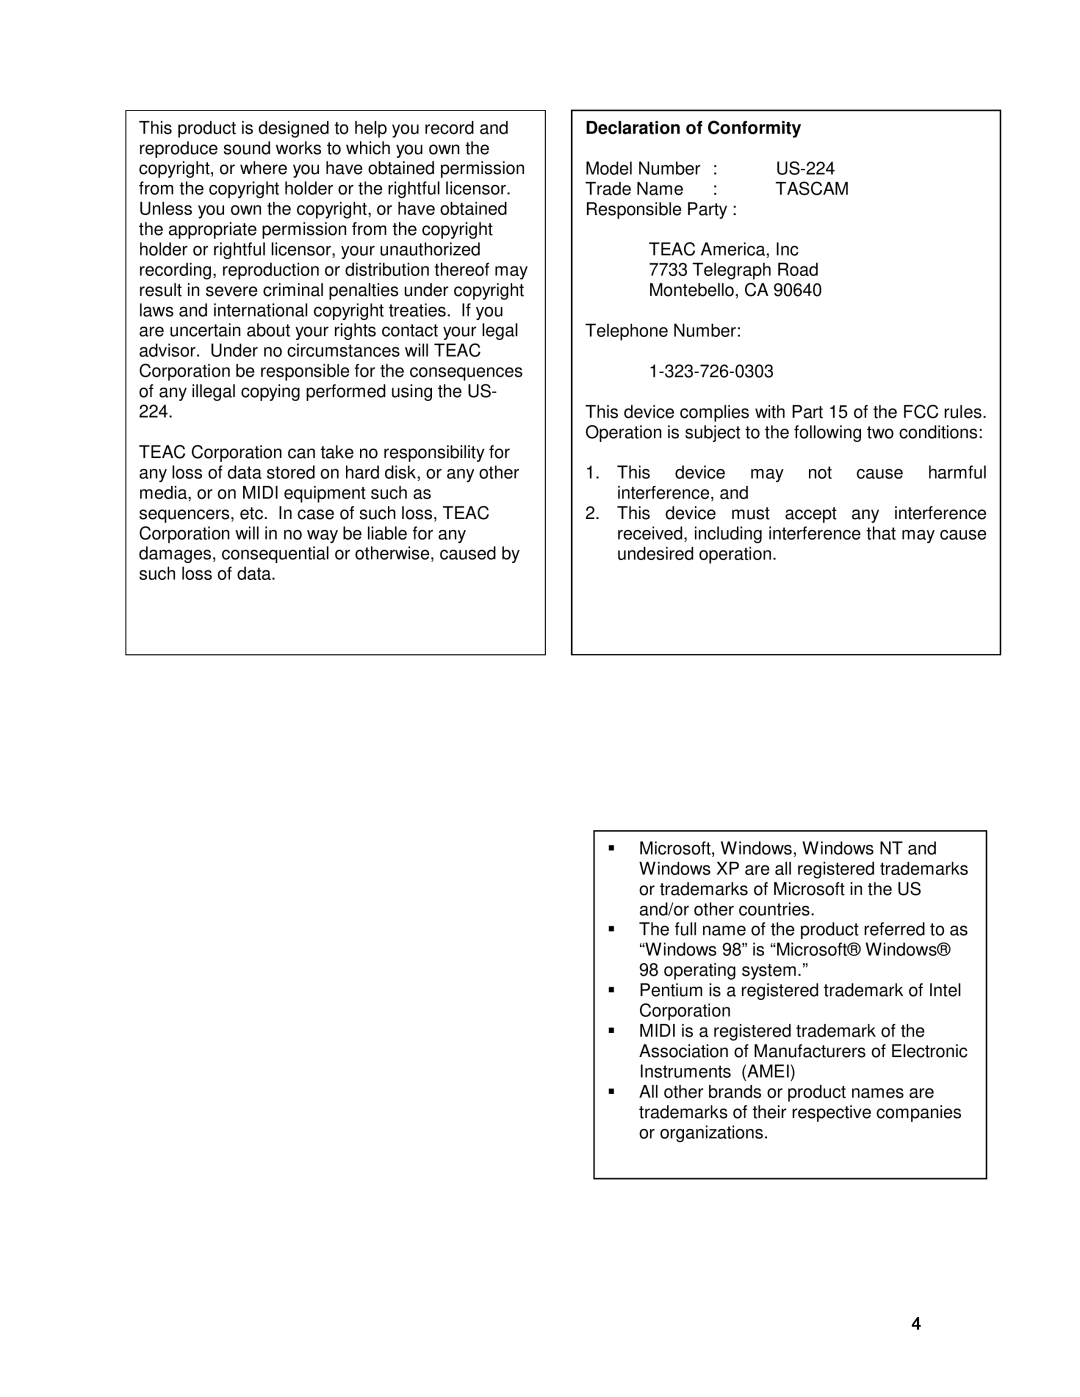 Tascam US-224 owner manual Declaration of Conformity 